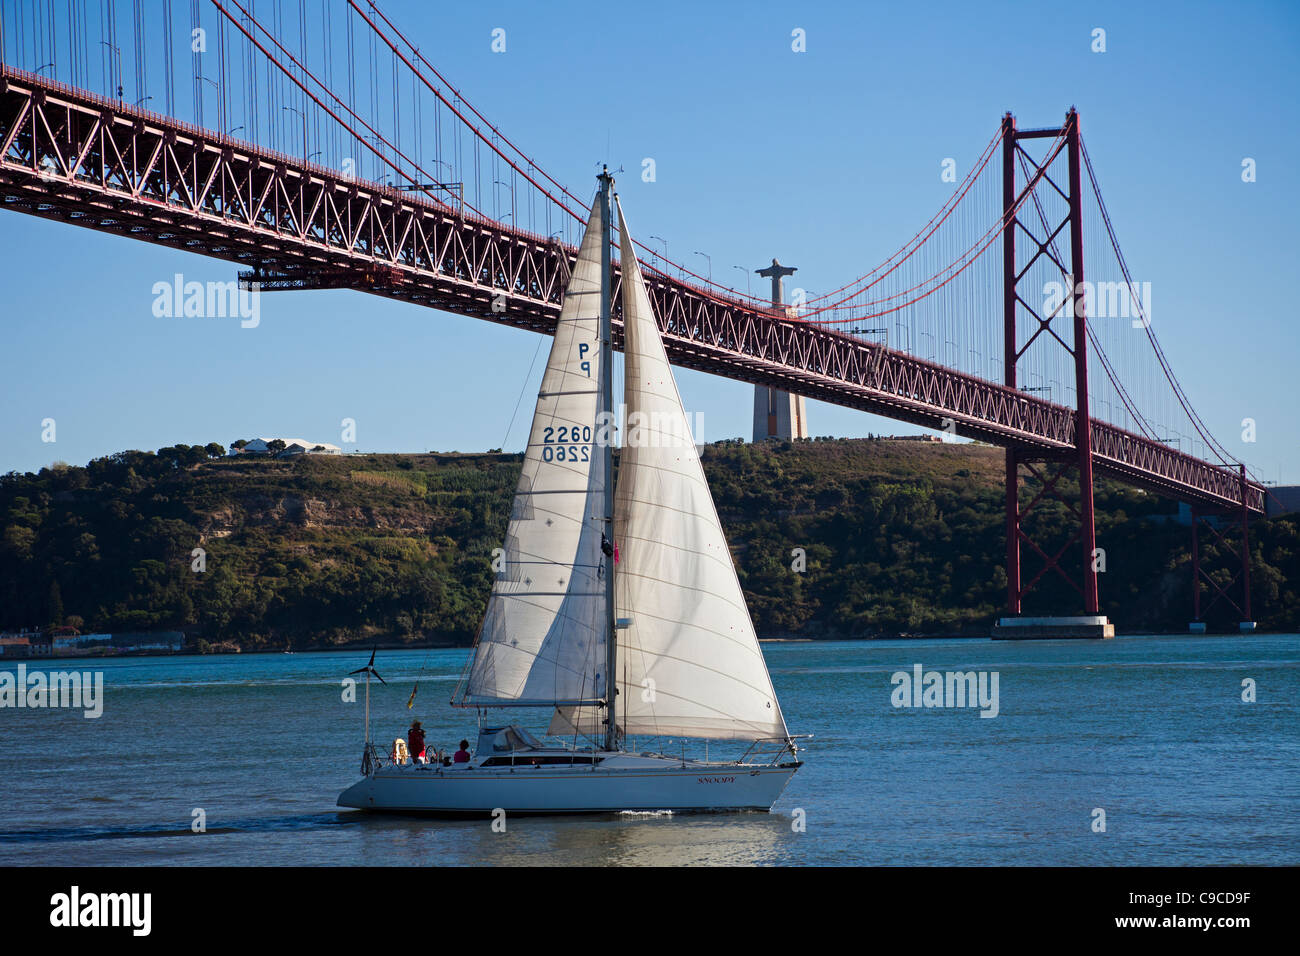 Vela sotto Pont 25 de Abril ponte sul fiume Tagus Lisbona Portogallo Foto Stock